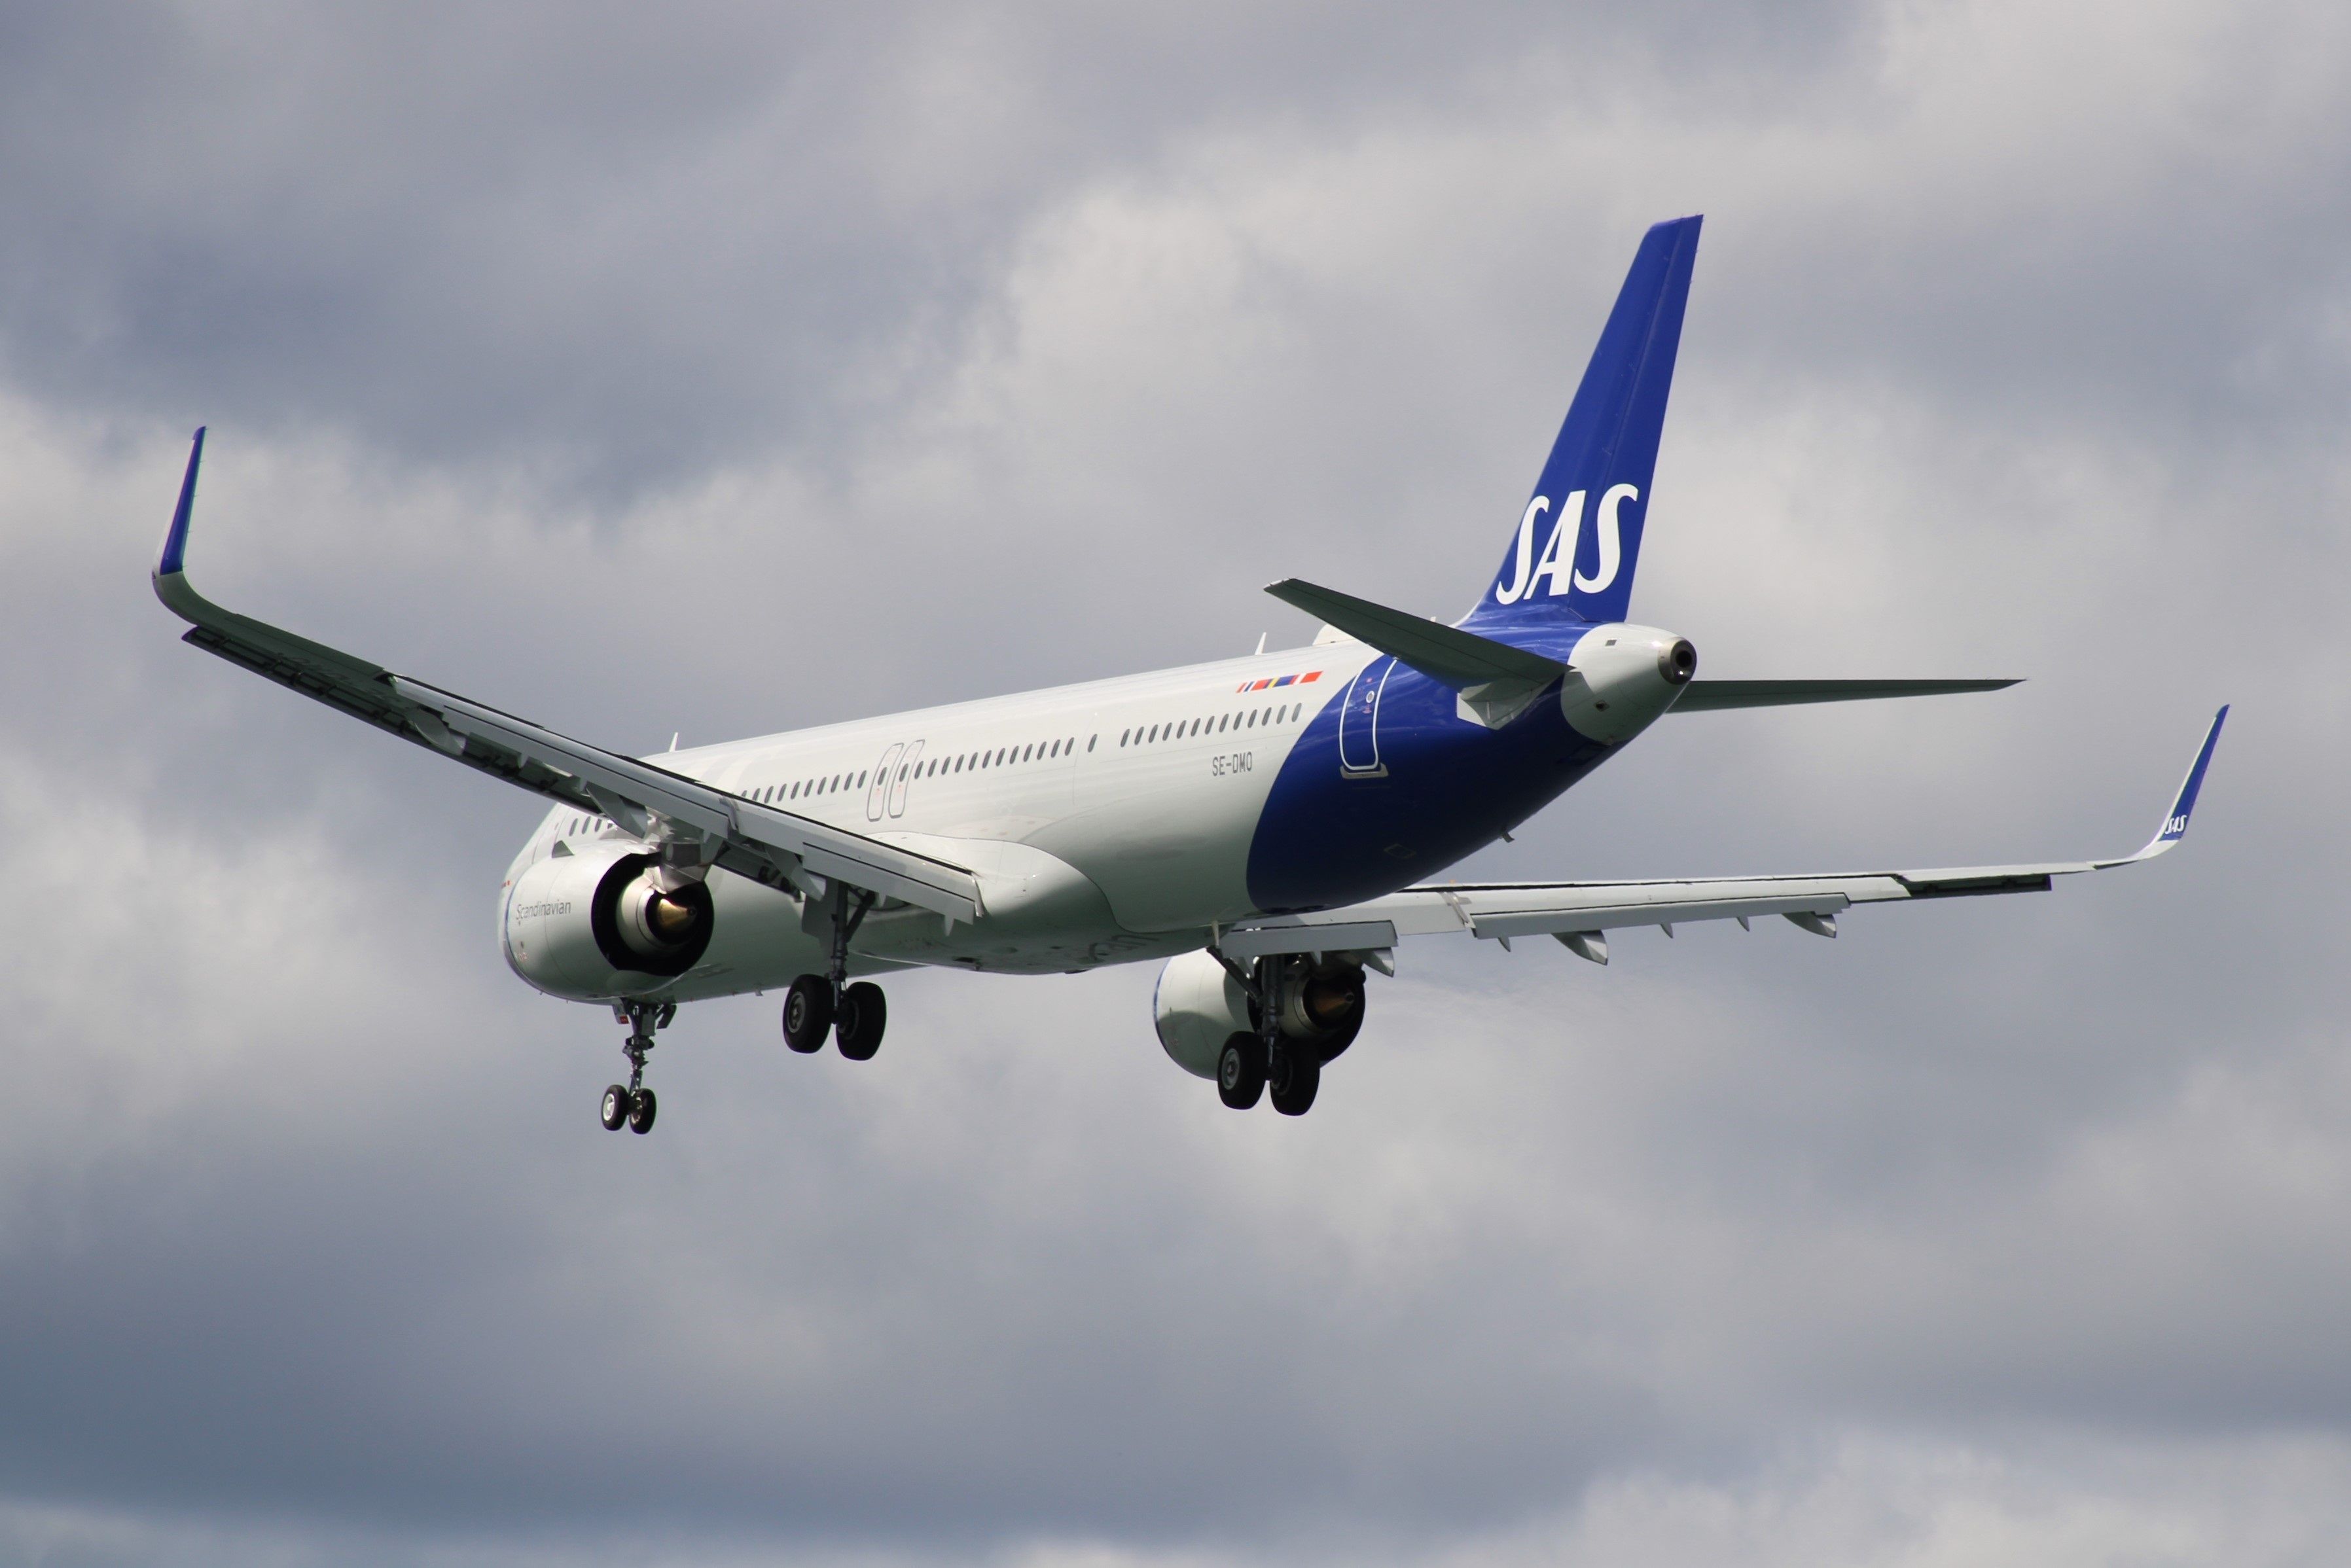 SAS A321LR landing